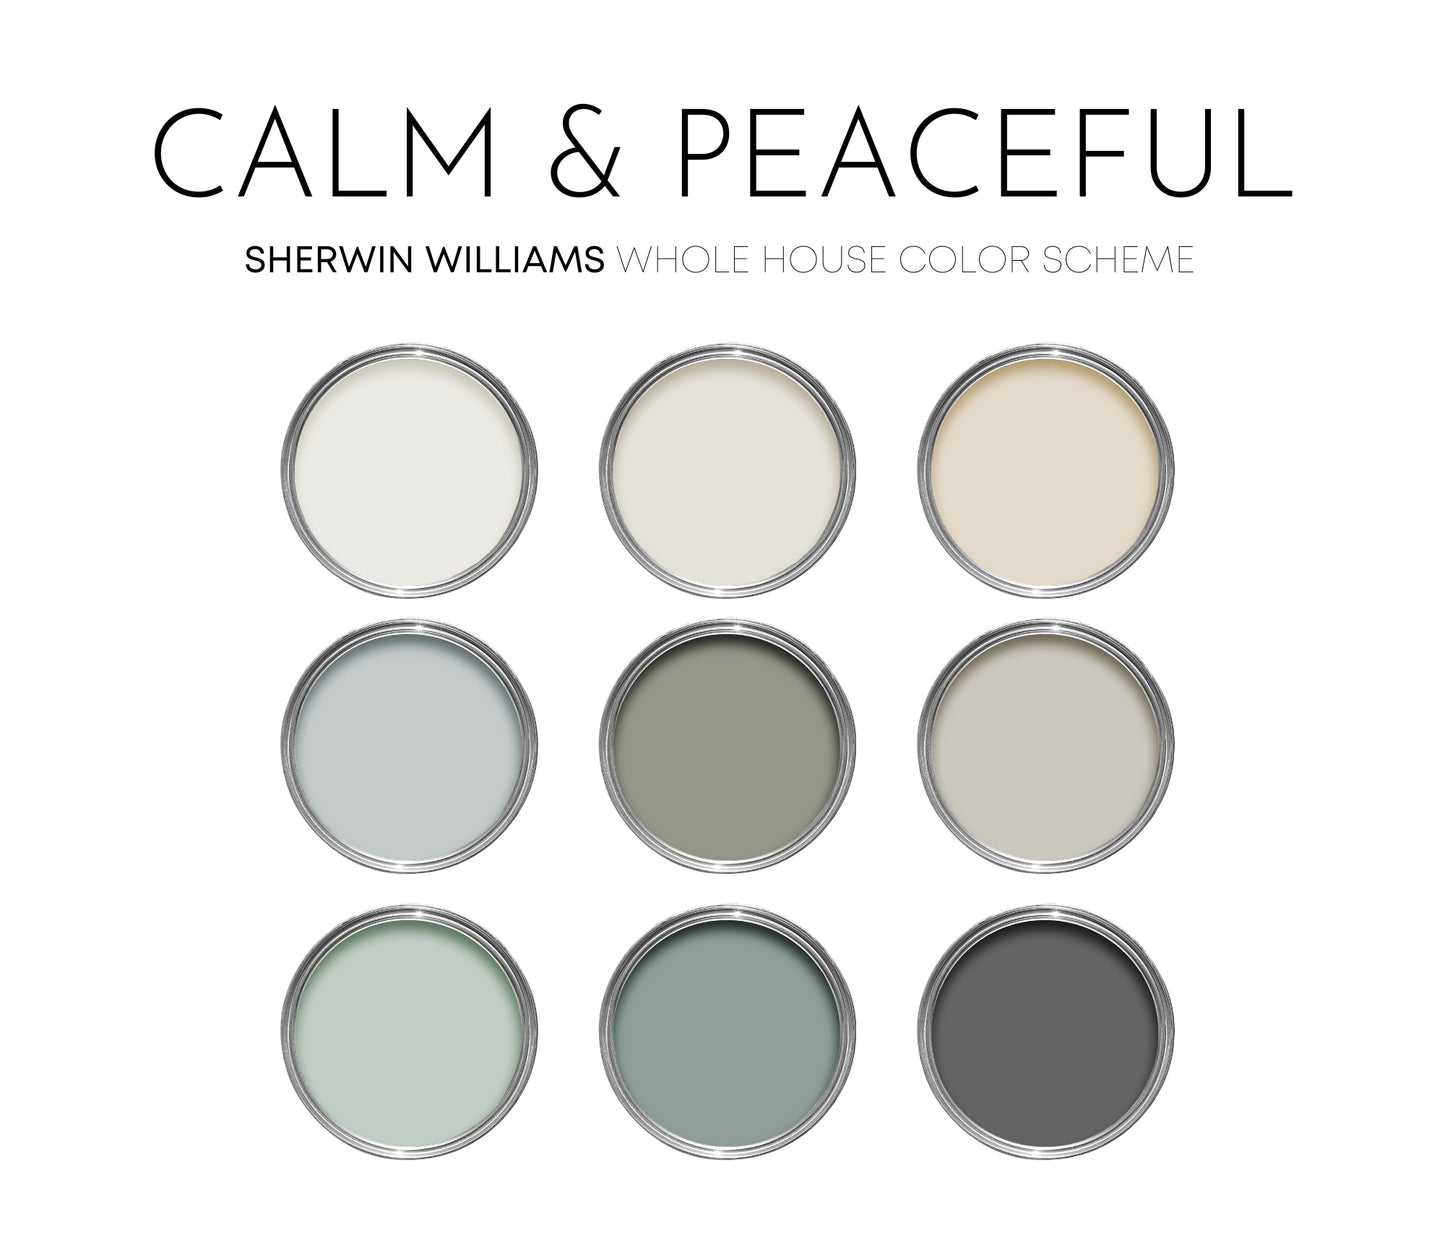 Calm and Peaceful Sherwin Williams Paint Palette, Neutral Interior Paint Colors, Coastal Color Scheme, Pure White